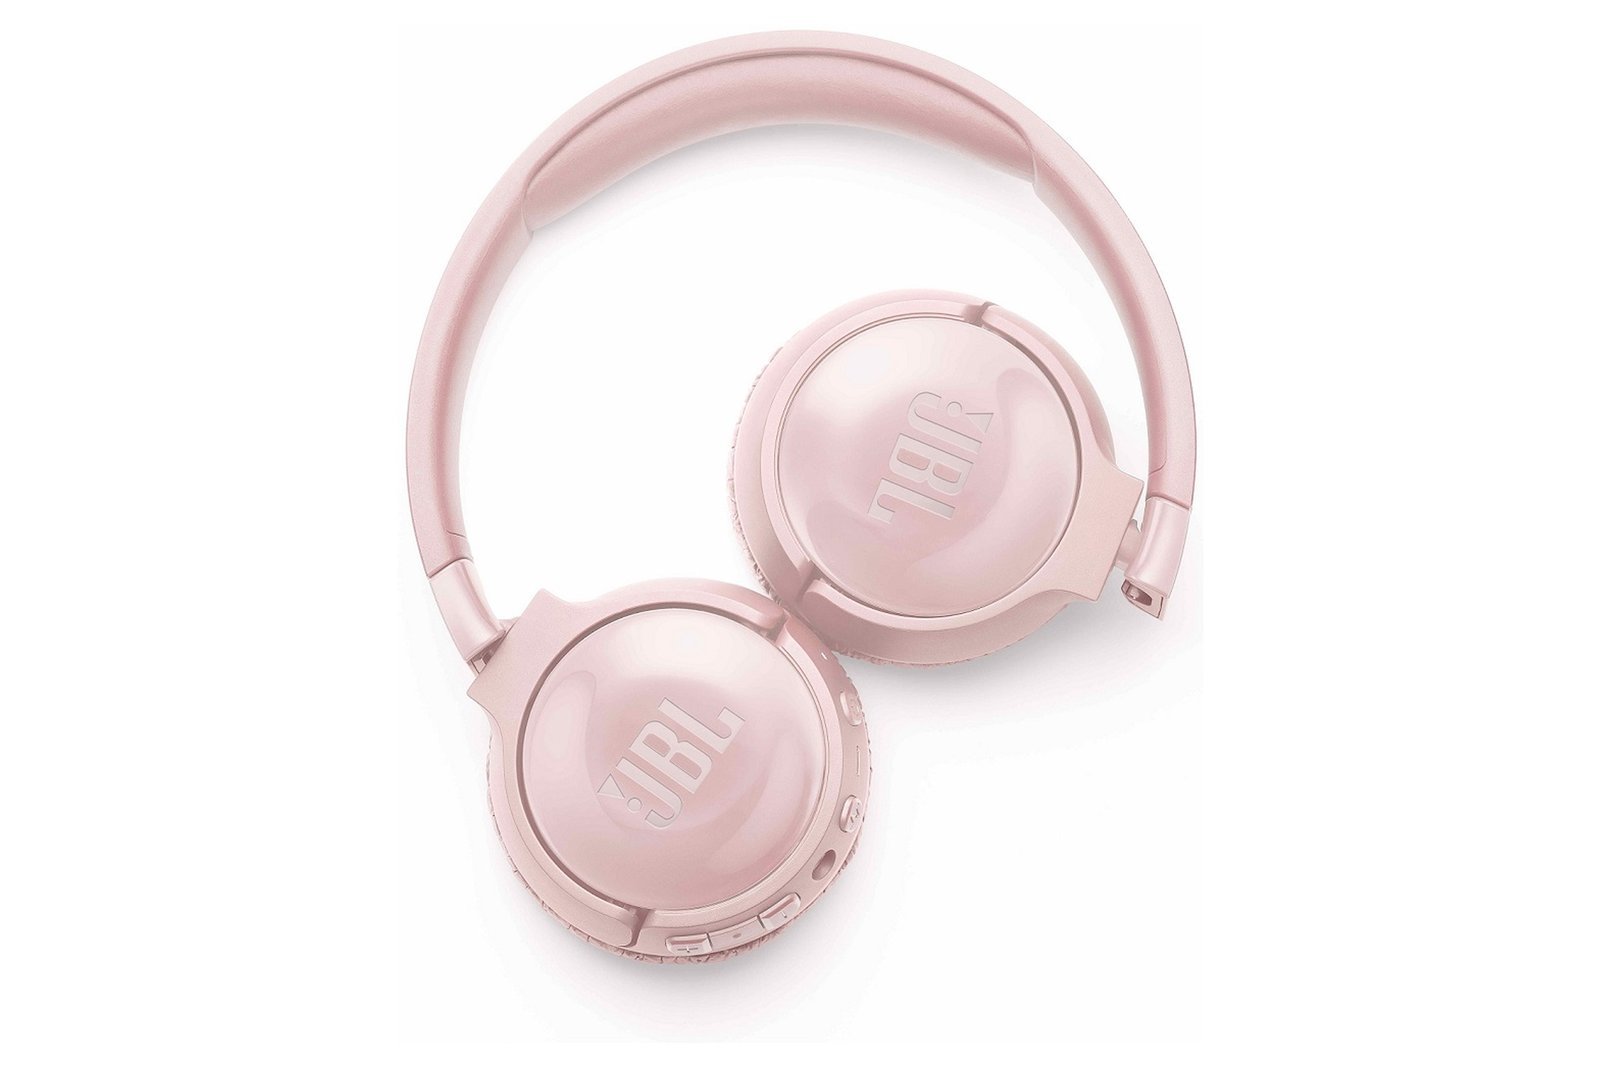 New Wireless Over-ear Noise-cancelling Headphones JBL 600BTNC TUNE600BTNC Pink